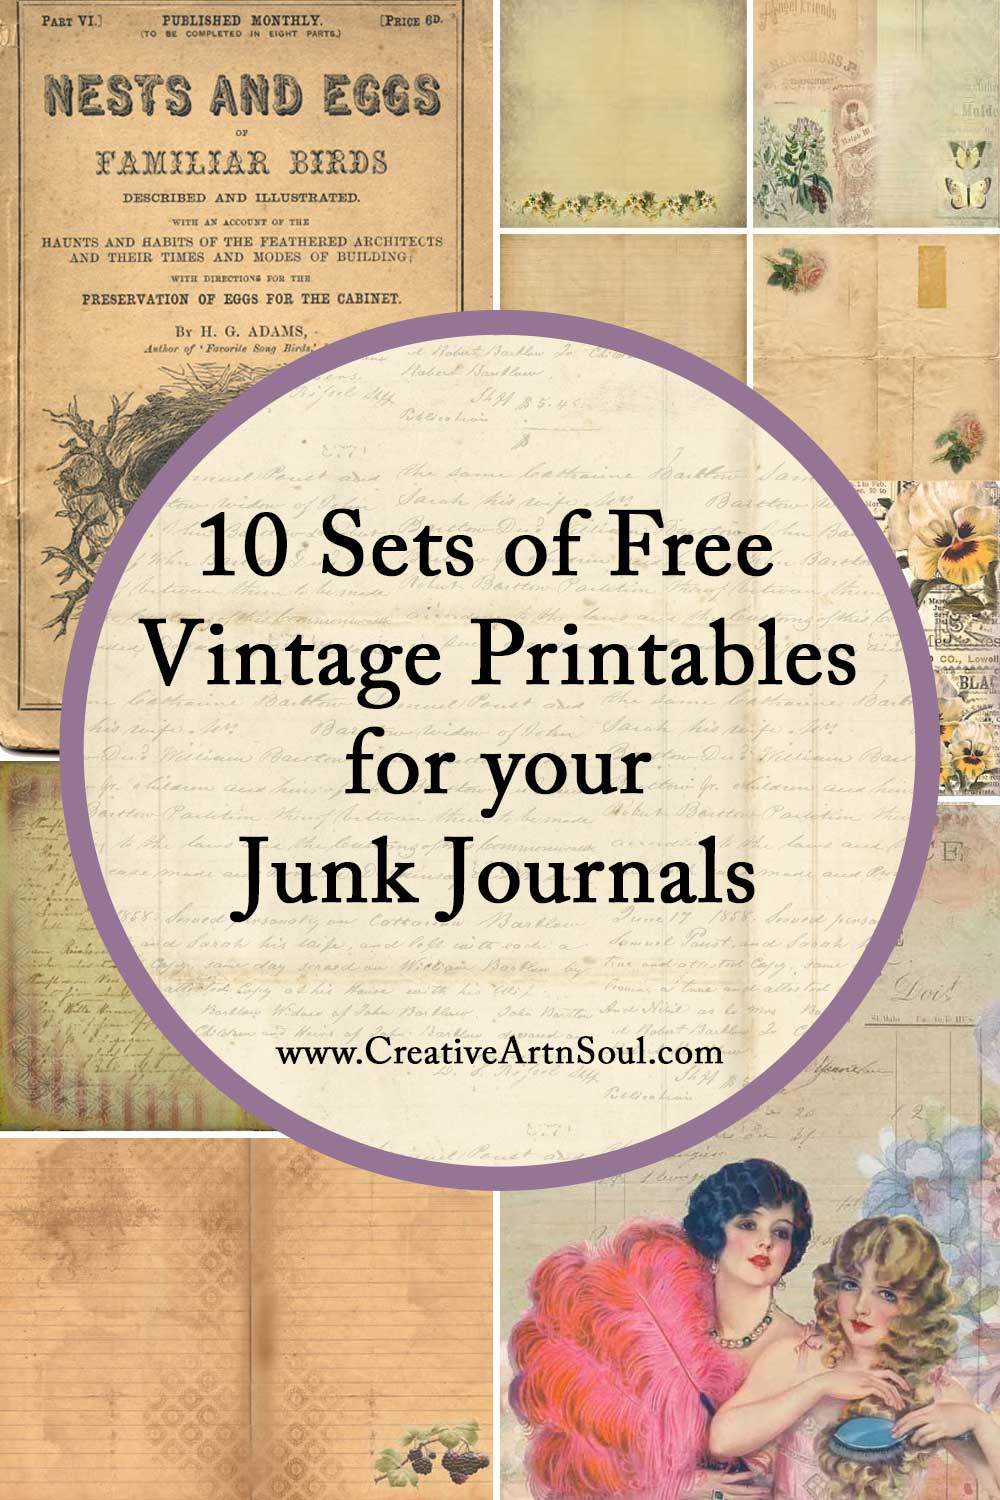 10 Sets Of Free Vintage Printables For Your Junk Journals - Free Printable Images Vintage